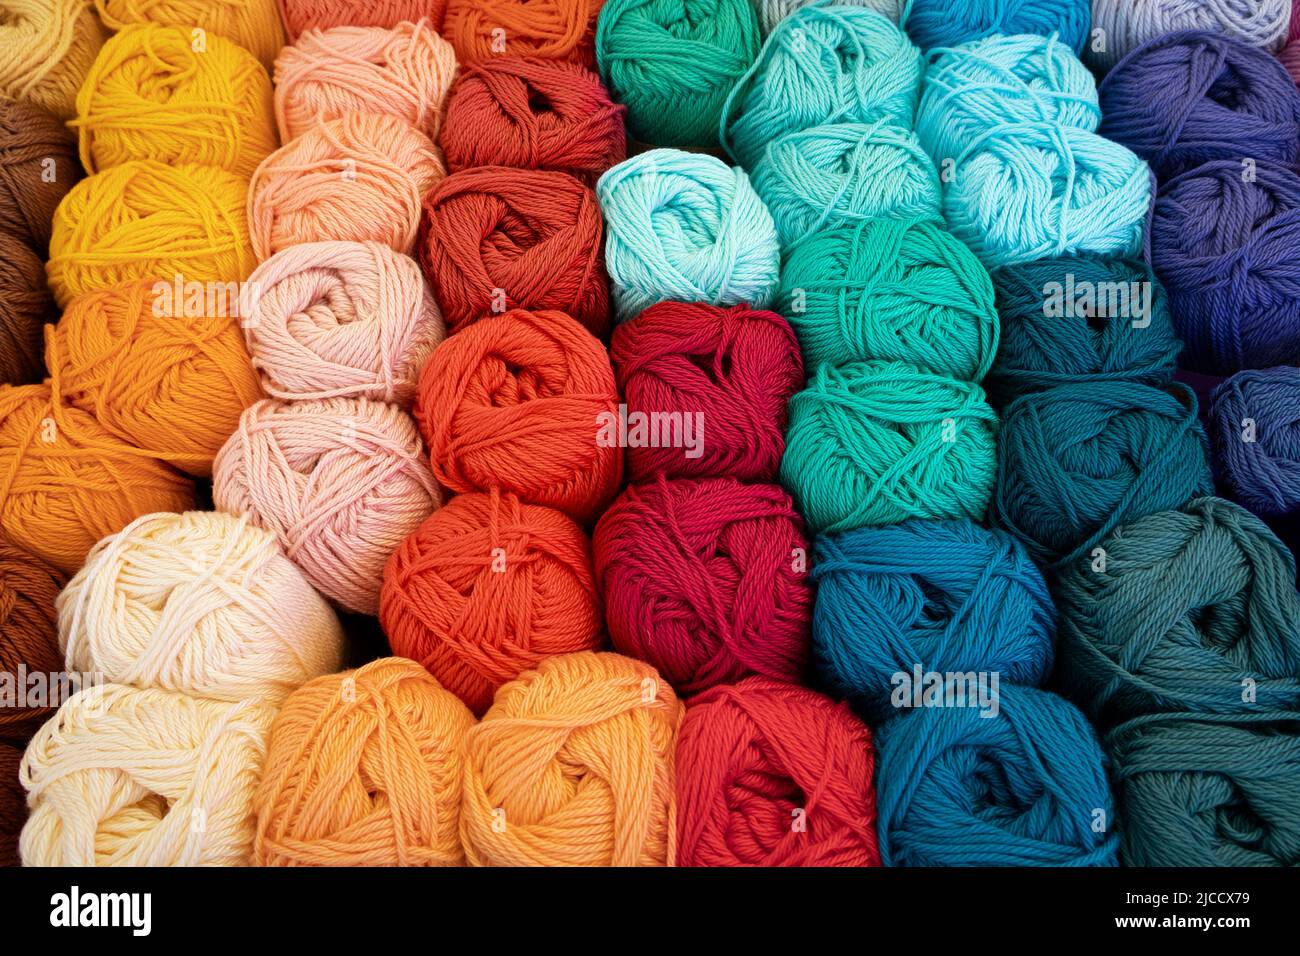 Variación colorida de bolas de lana tejida, nudos de lana, primer plano marco completo como fondo Foto de stock